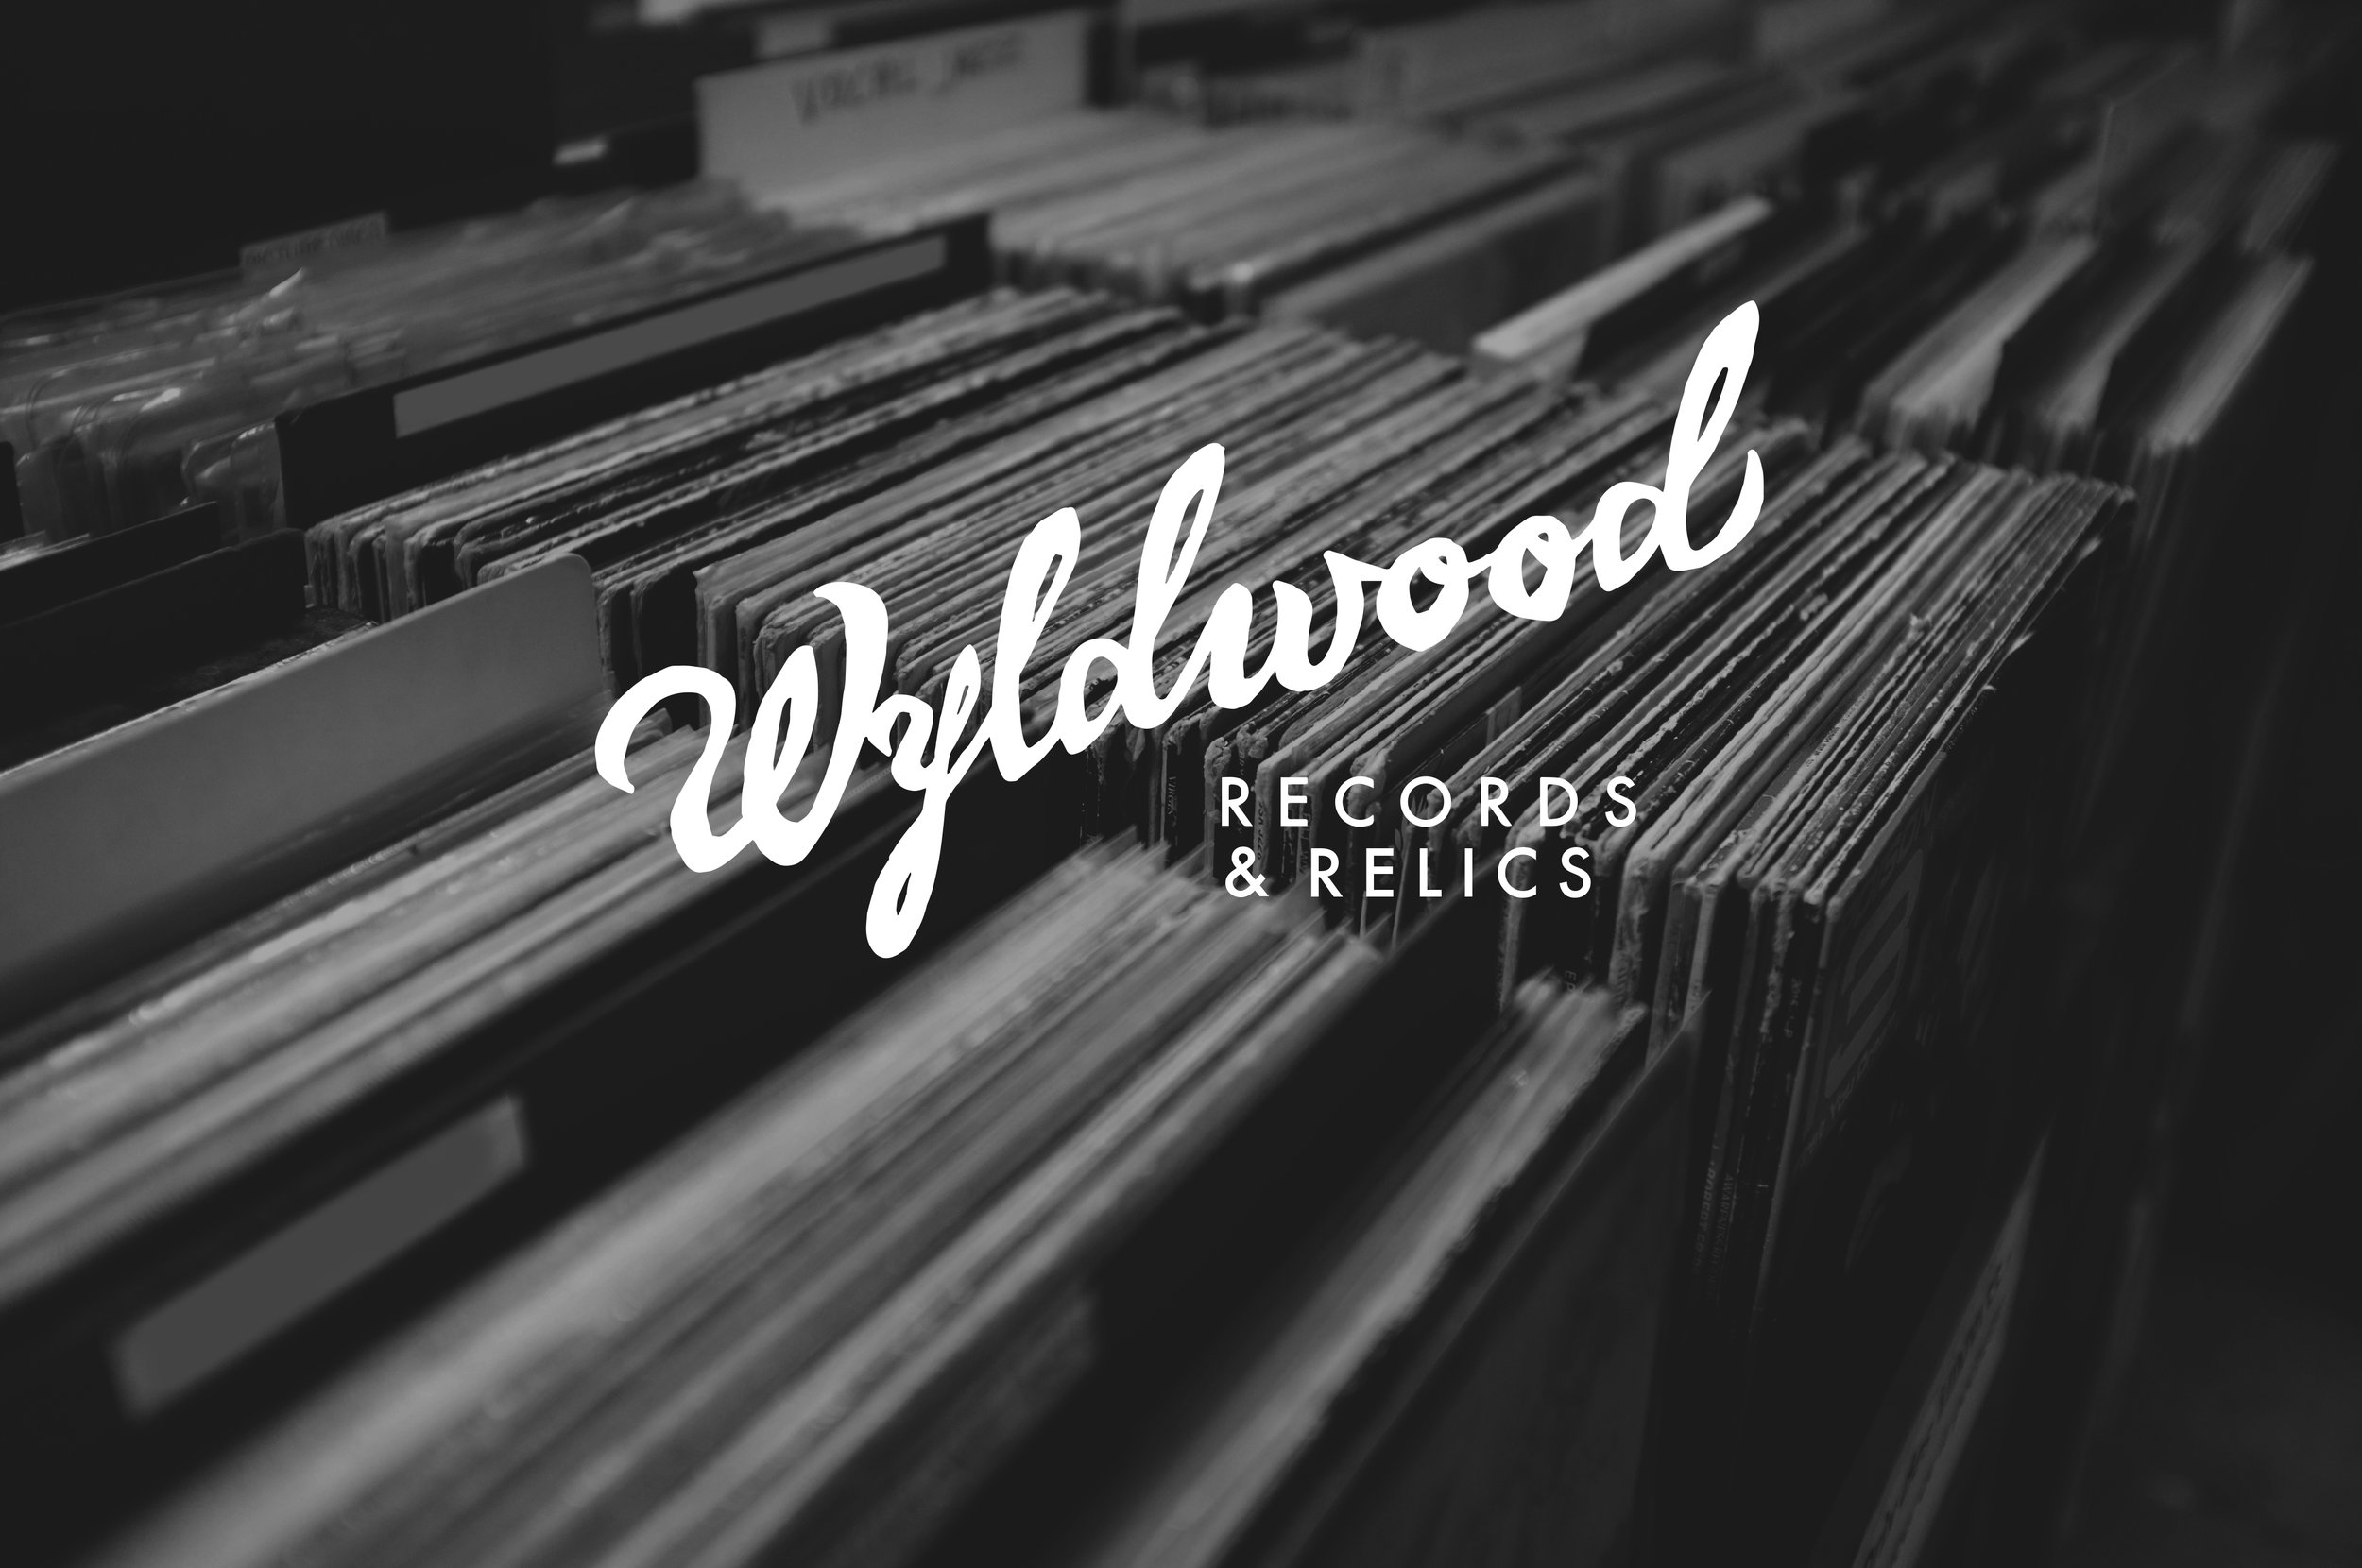 Wyldwood Records & Relics